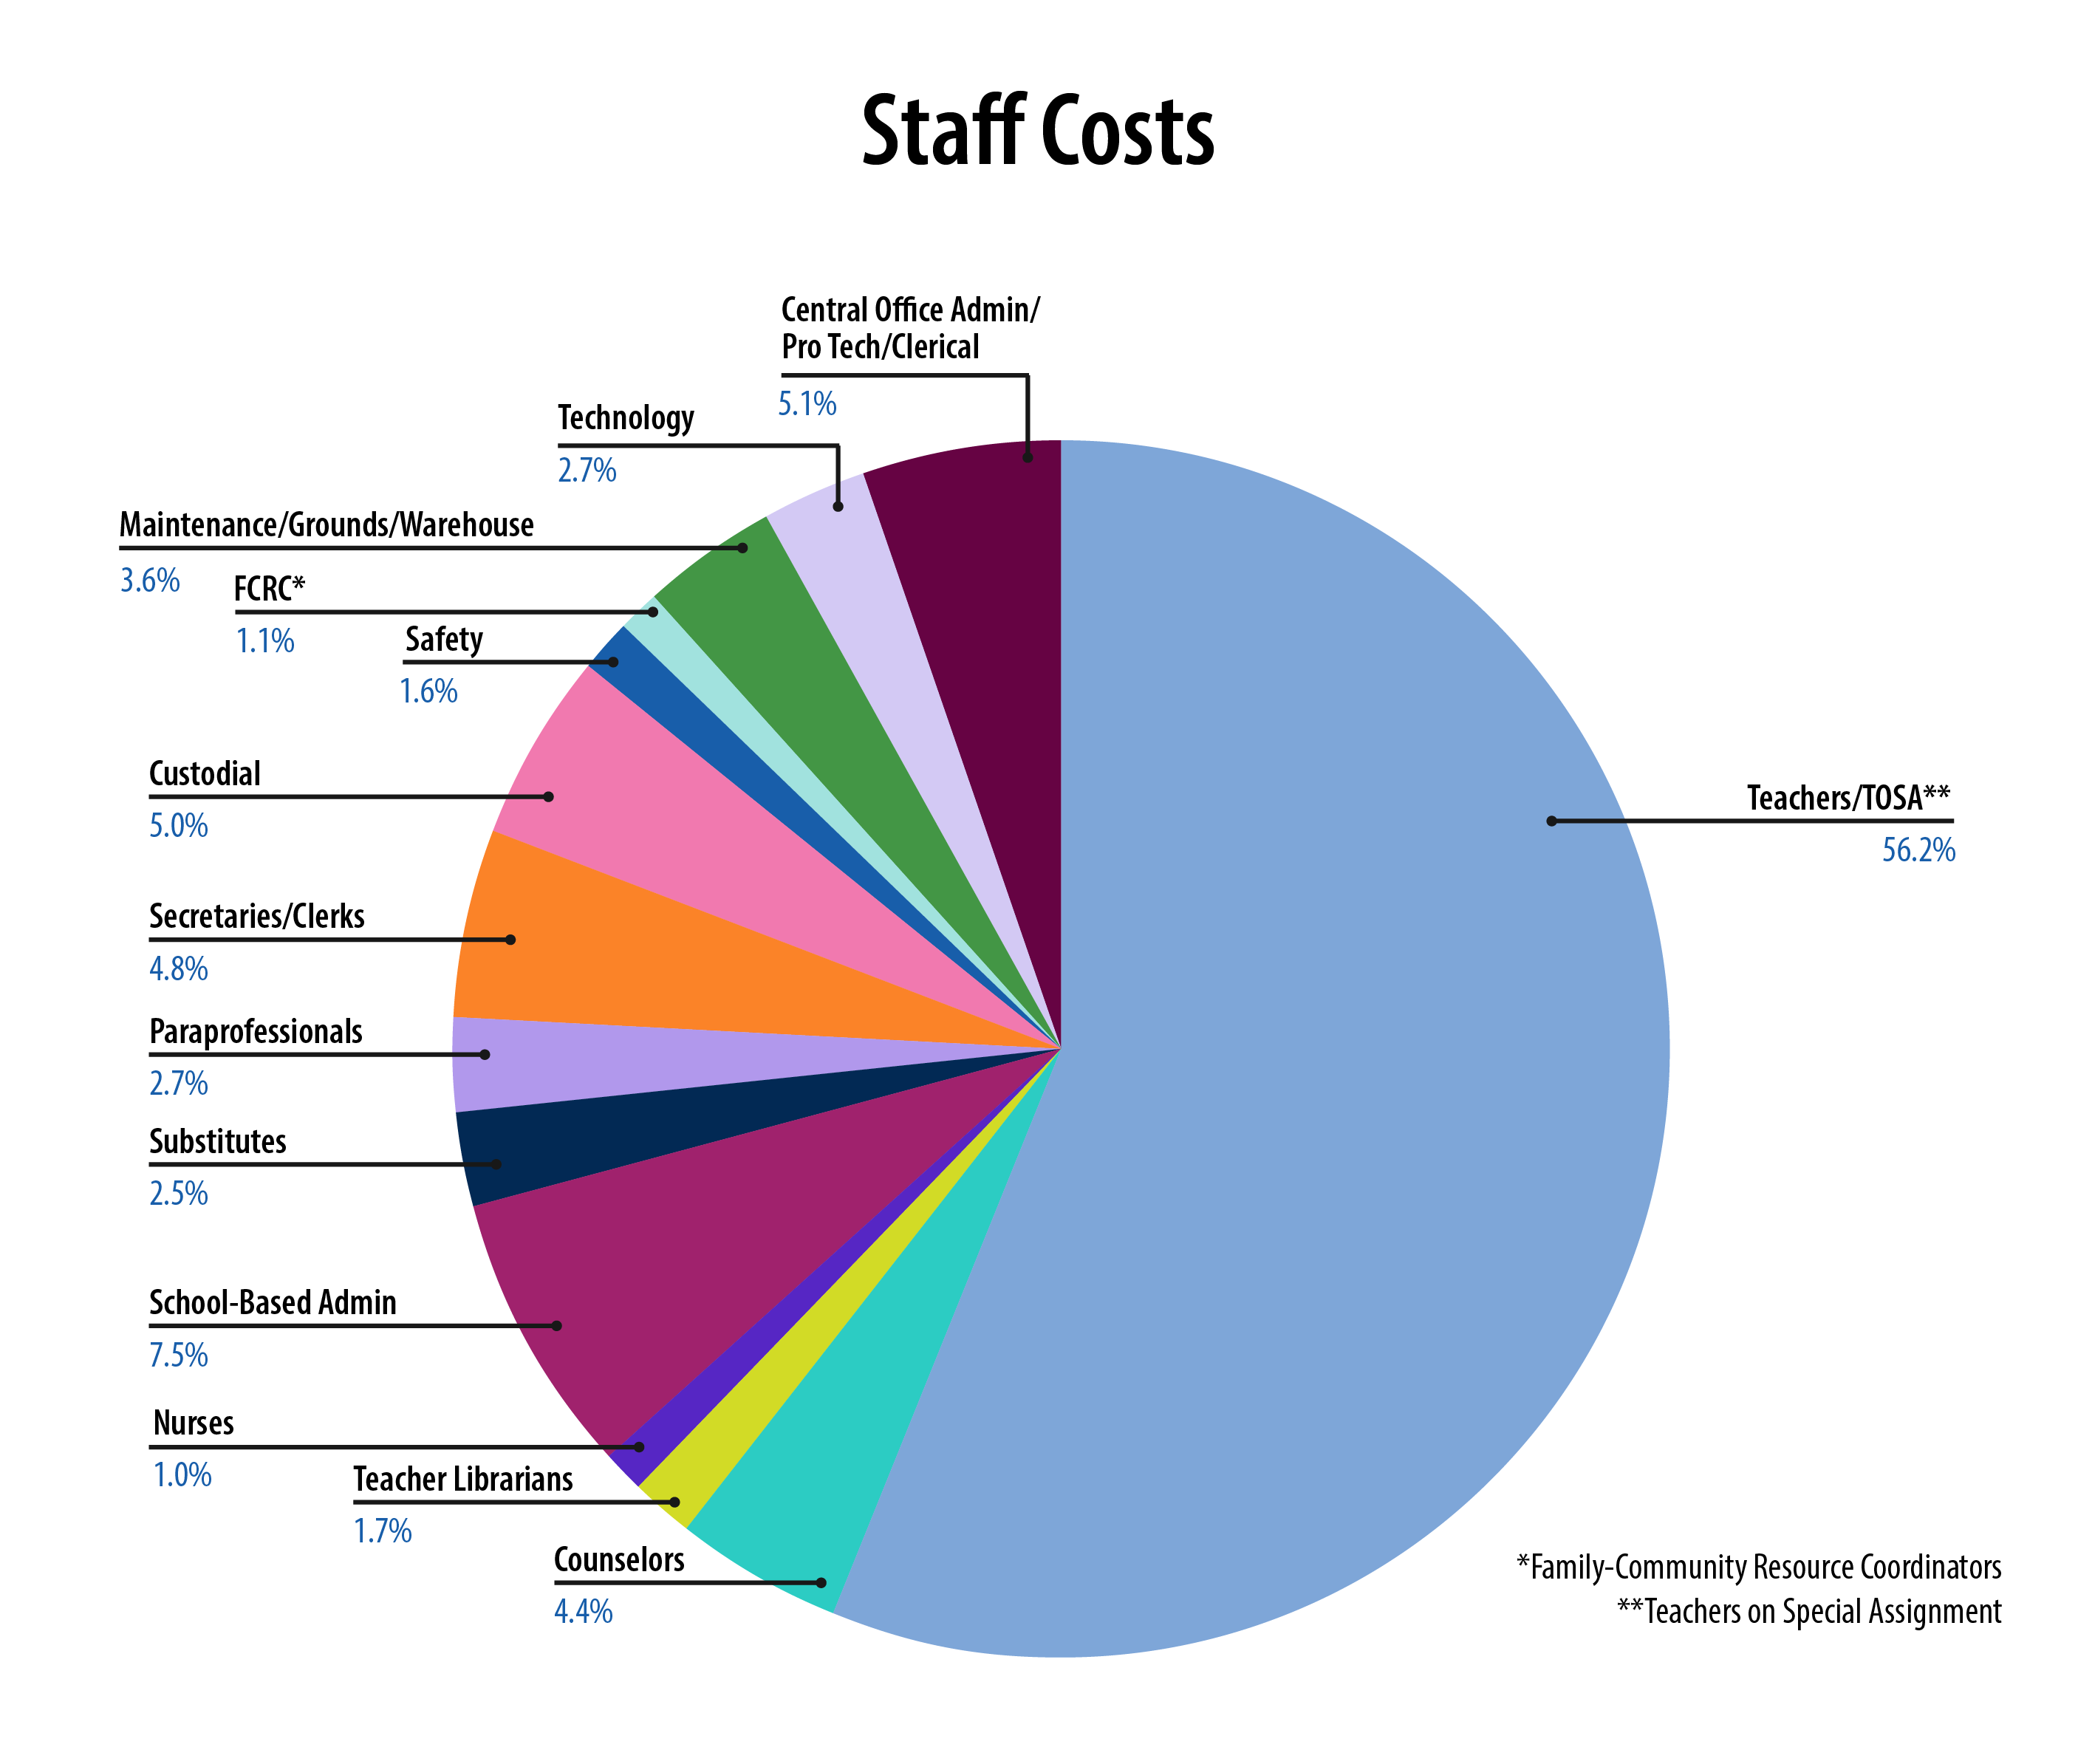 Staff Costs pie chart